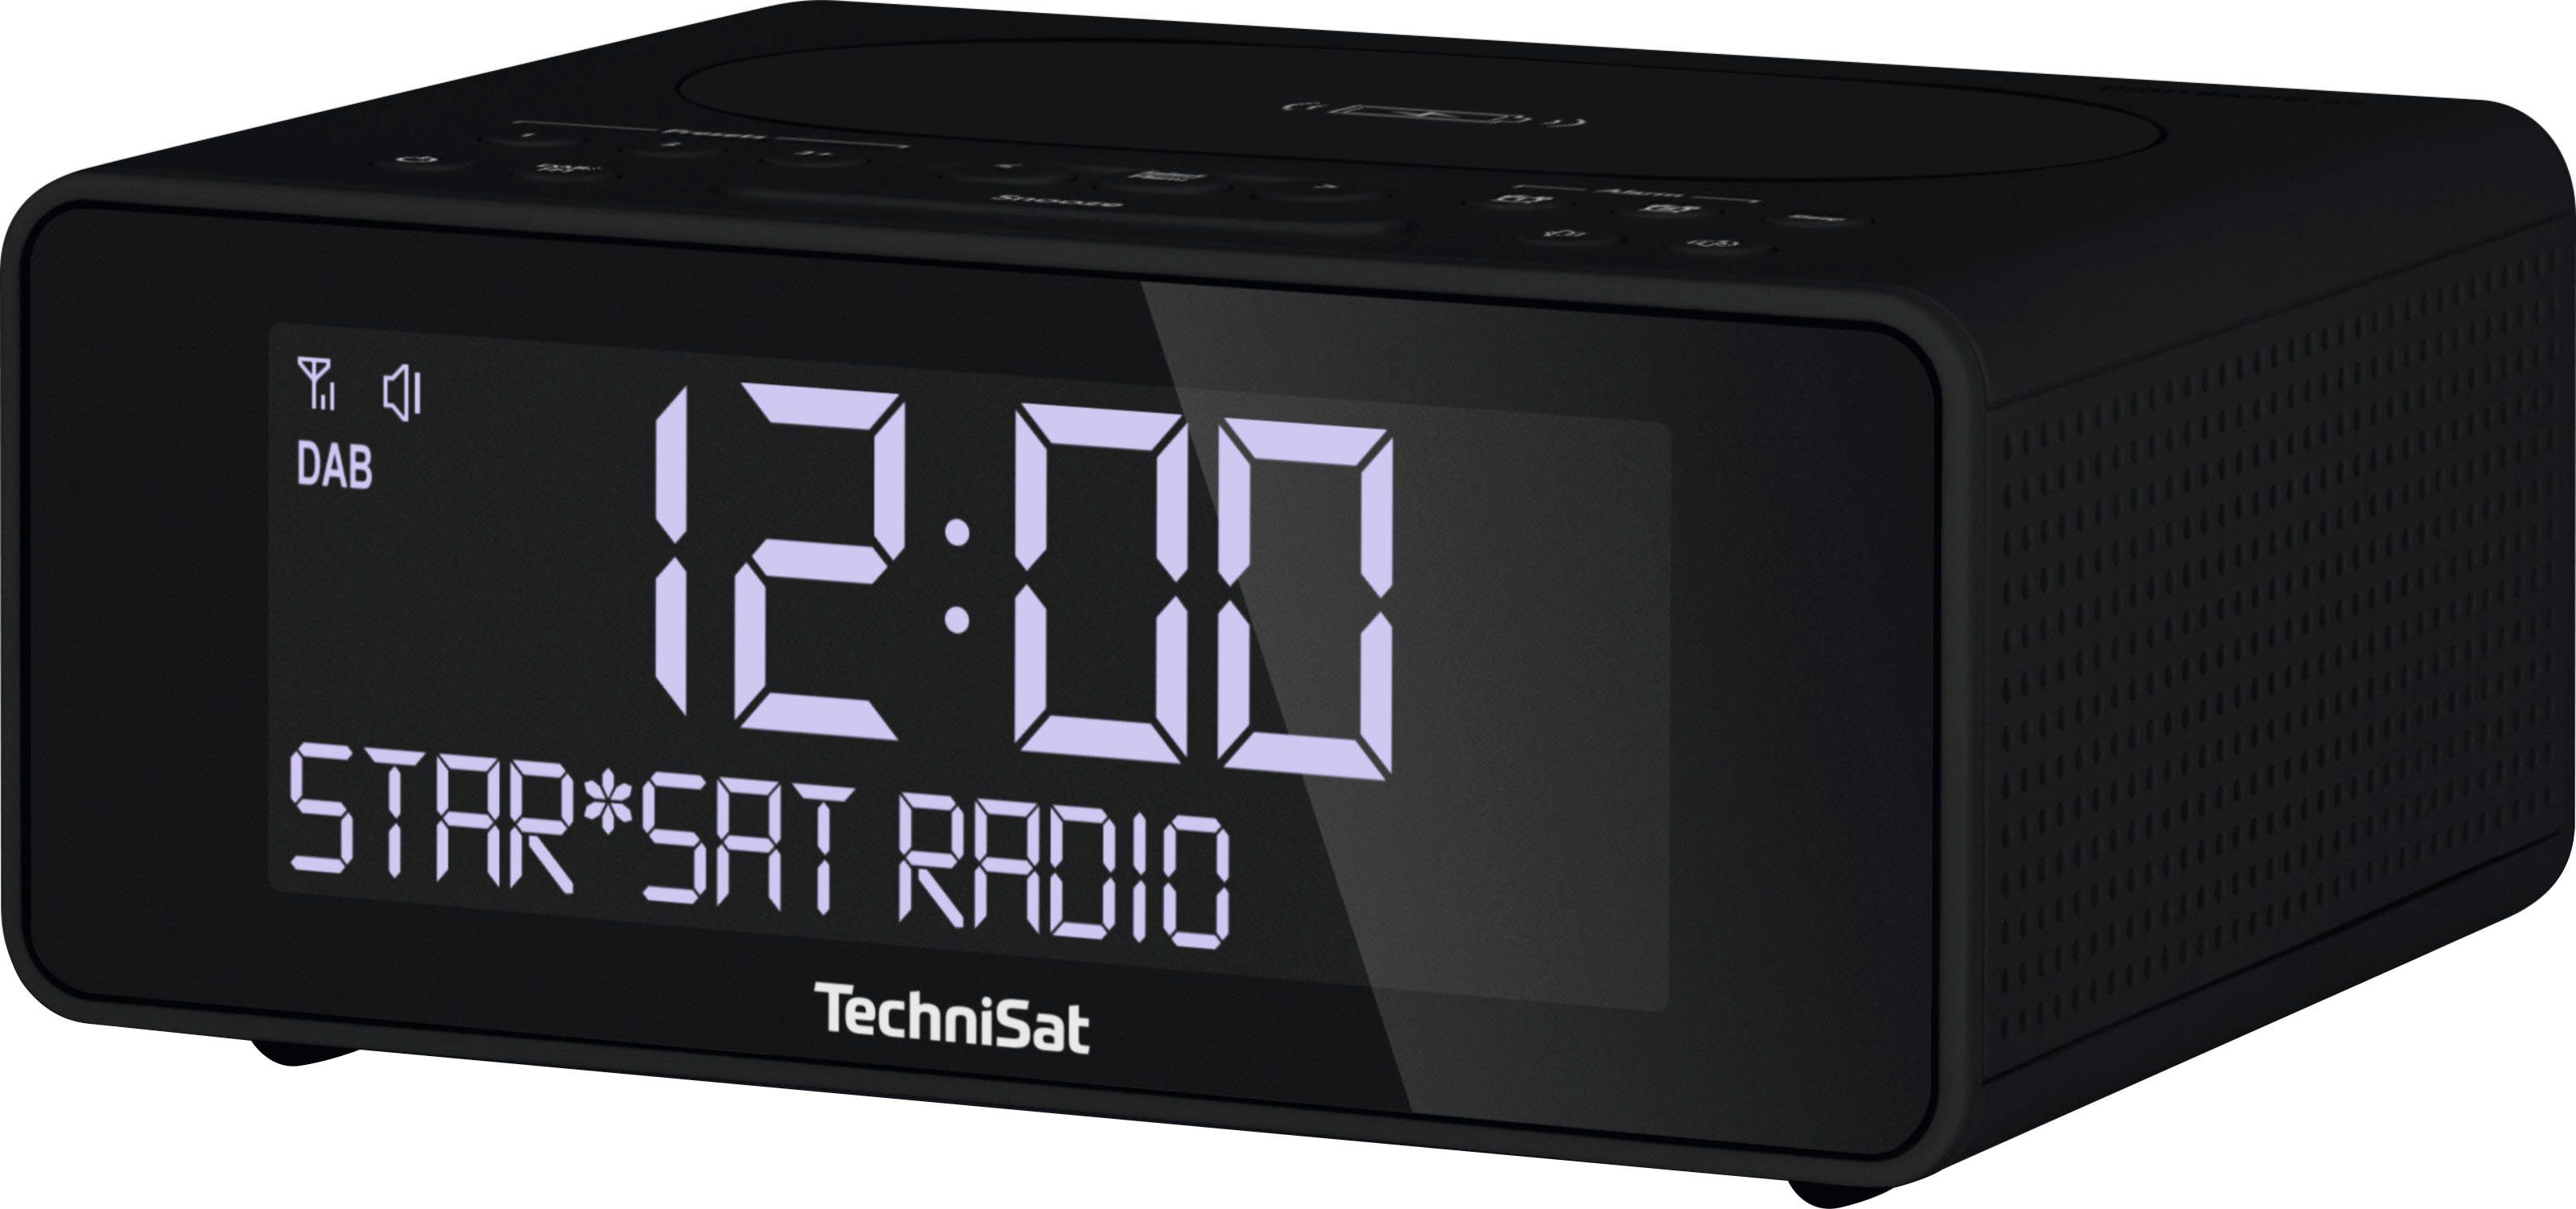 TechniSat Radiowecker »DIGITRADIO 52 Stereo« mit DAB+, Snooze-Funktion, dimmbares Display, Sleeptimer, Wireless Charging-kaufen